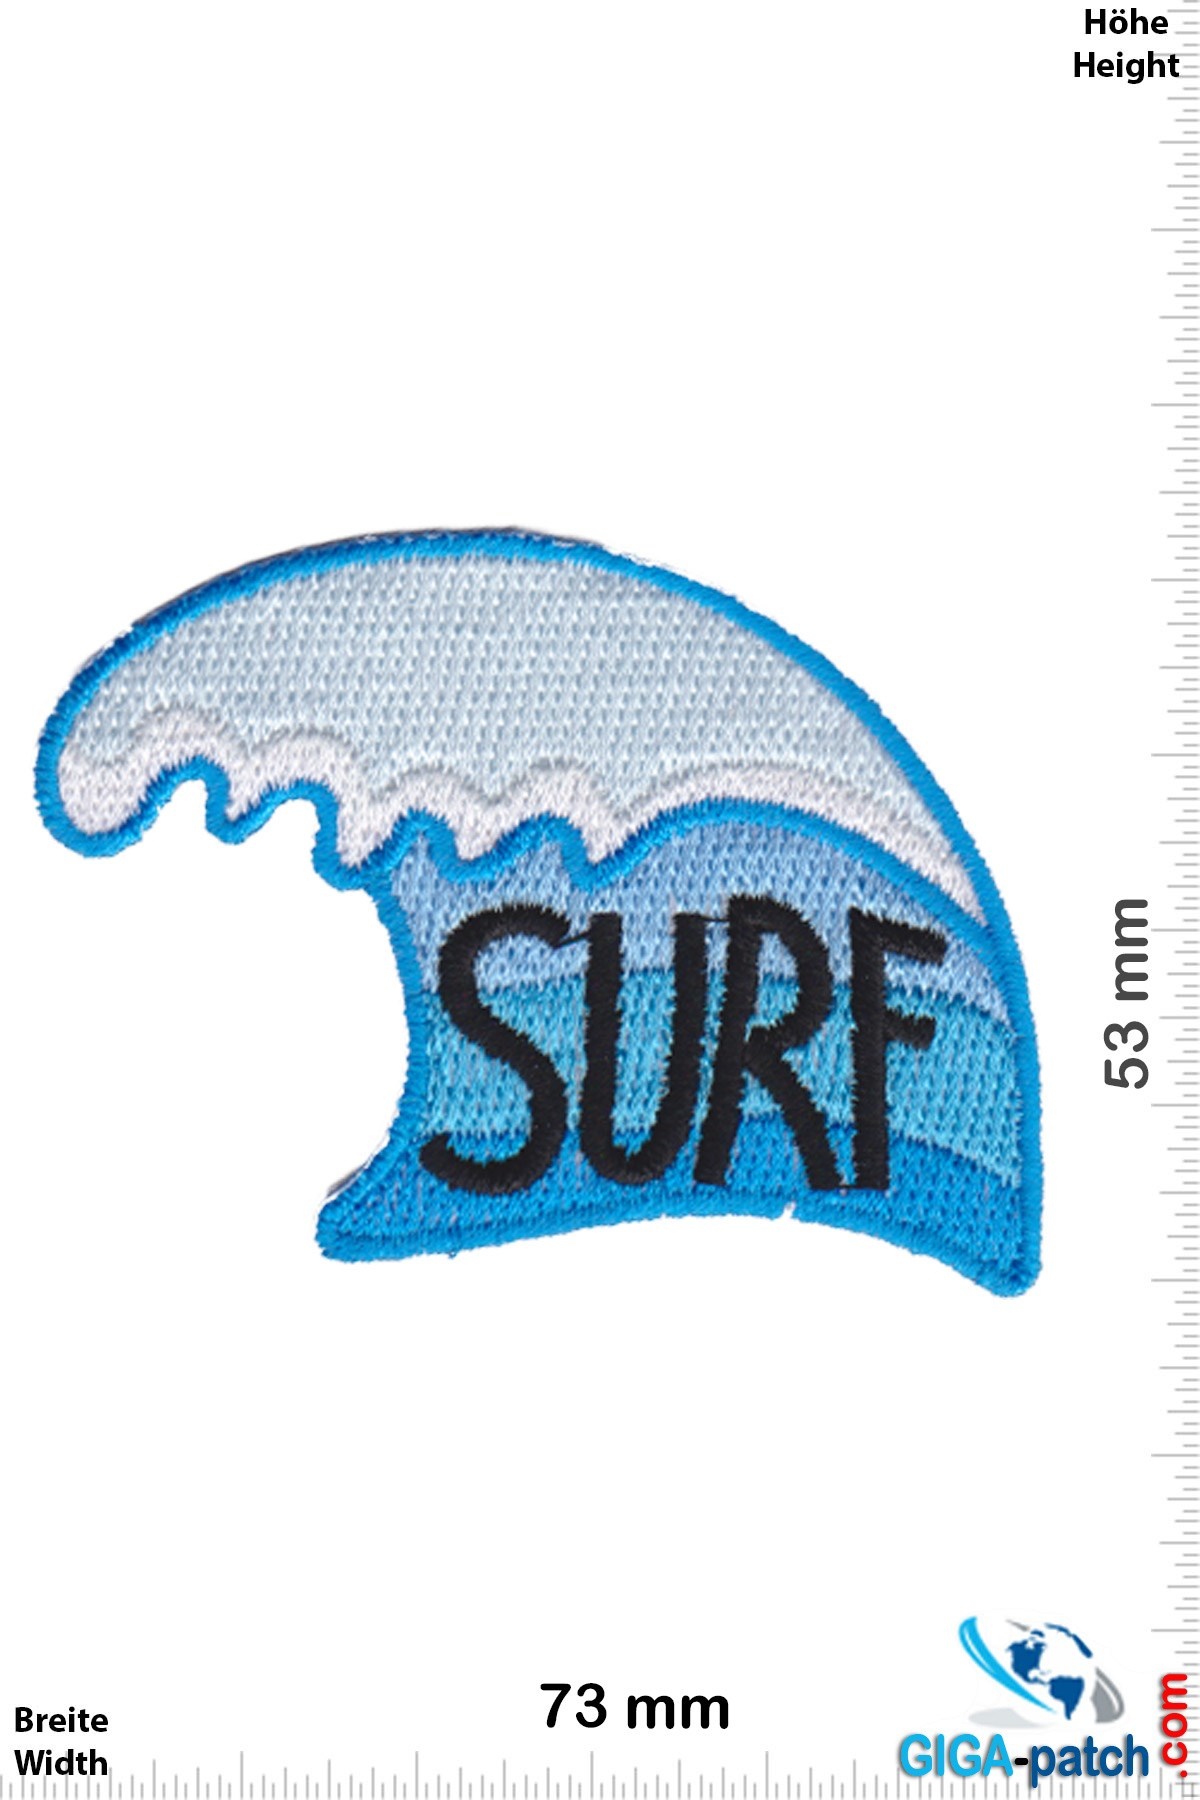 Surf - Welle